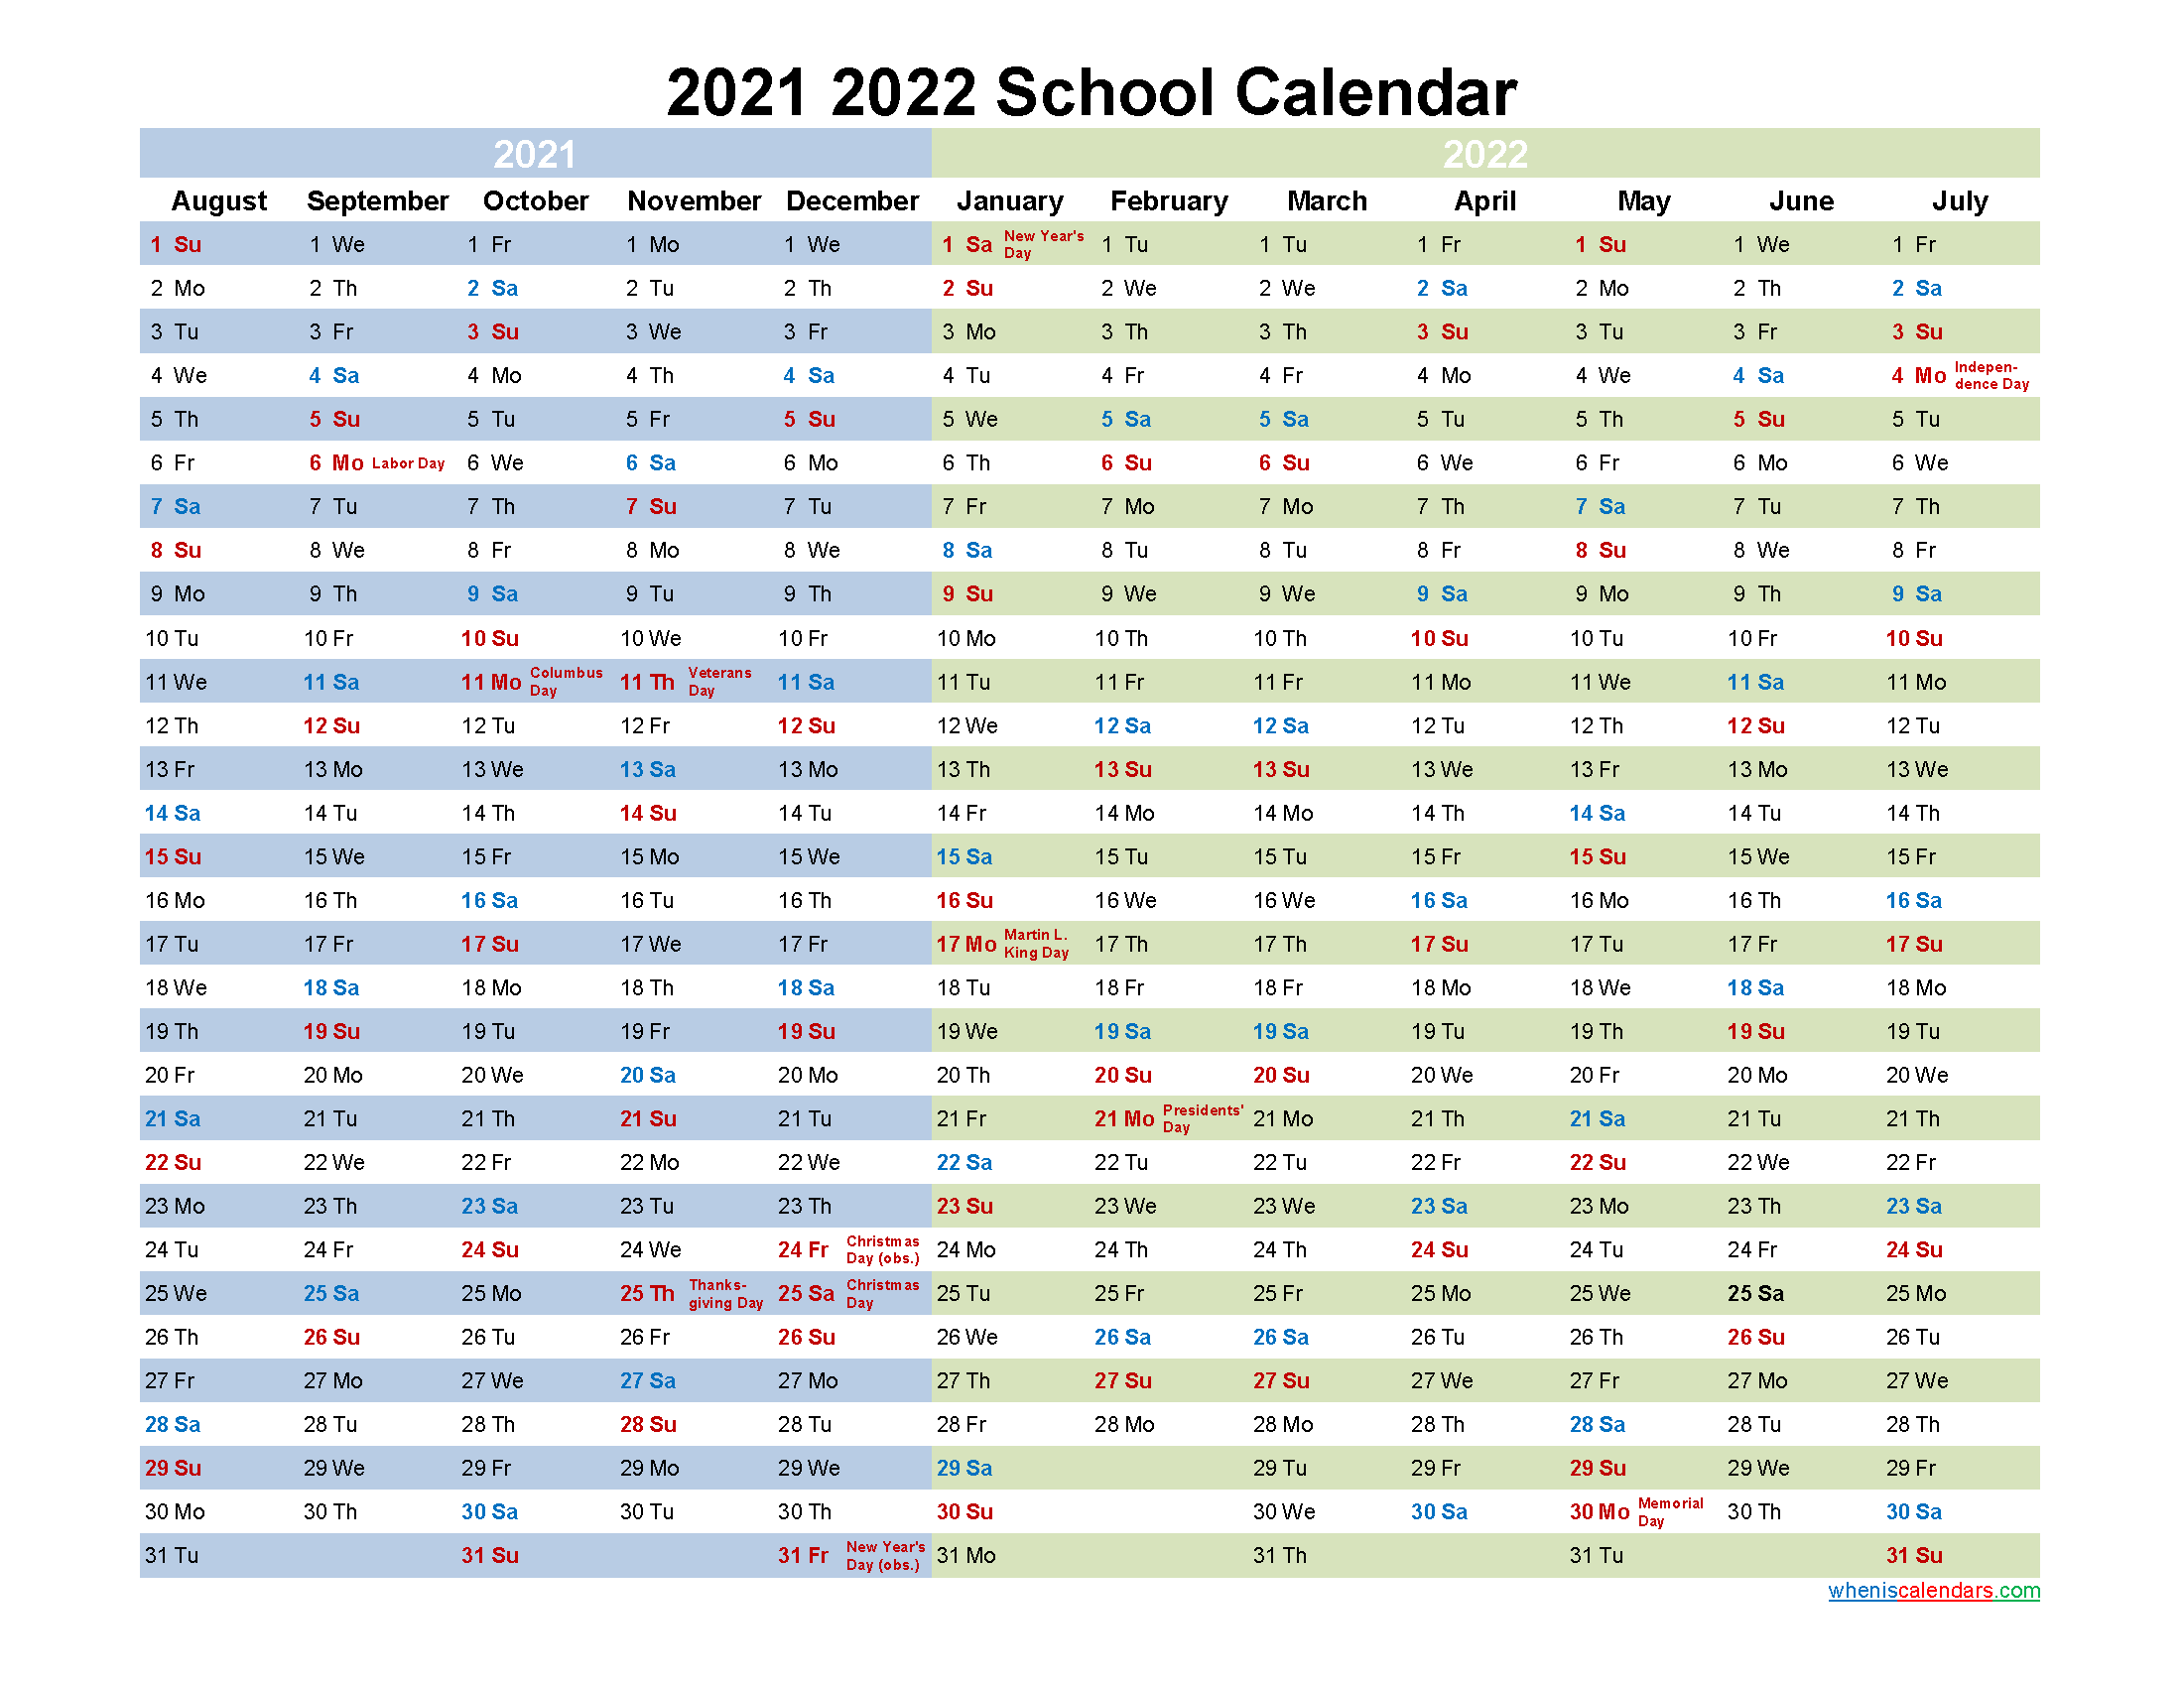 2021 and 2022 School Calendar Printable - Template No.22scl52